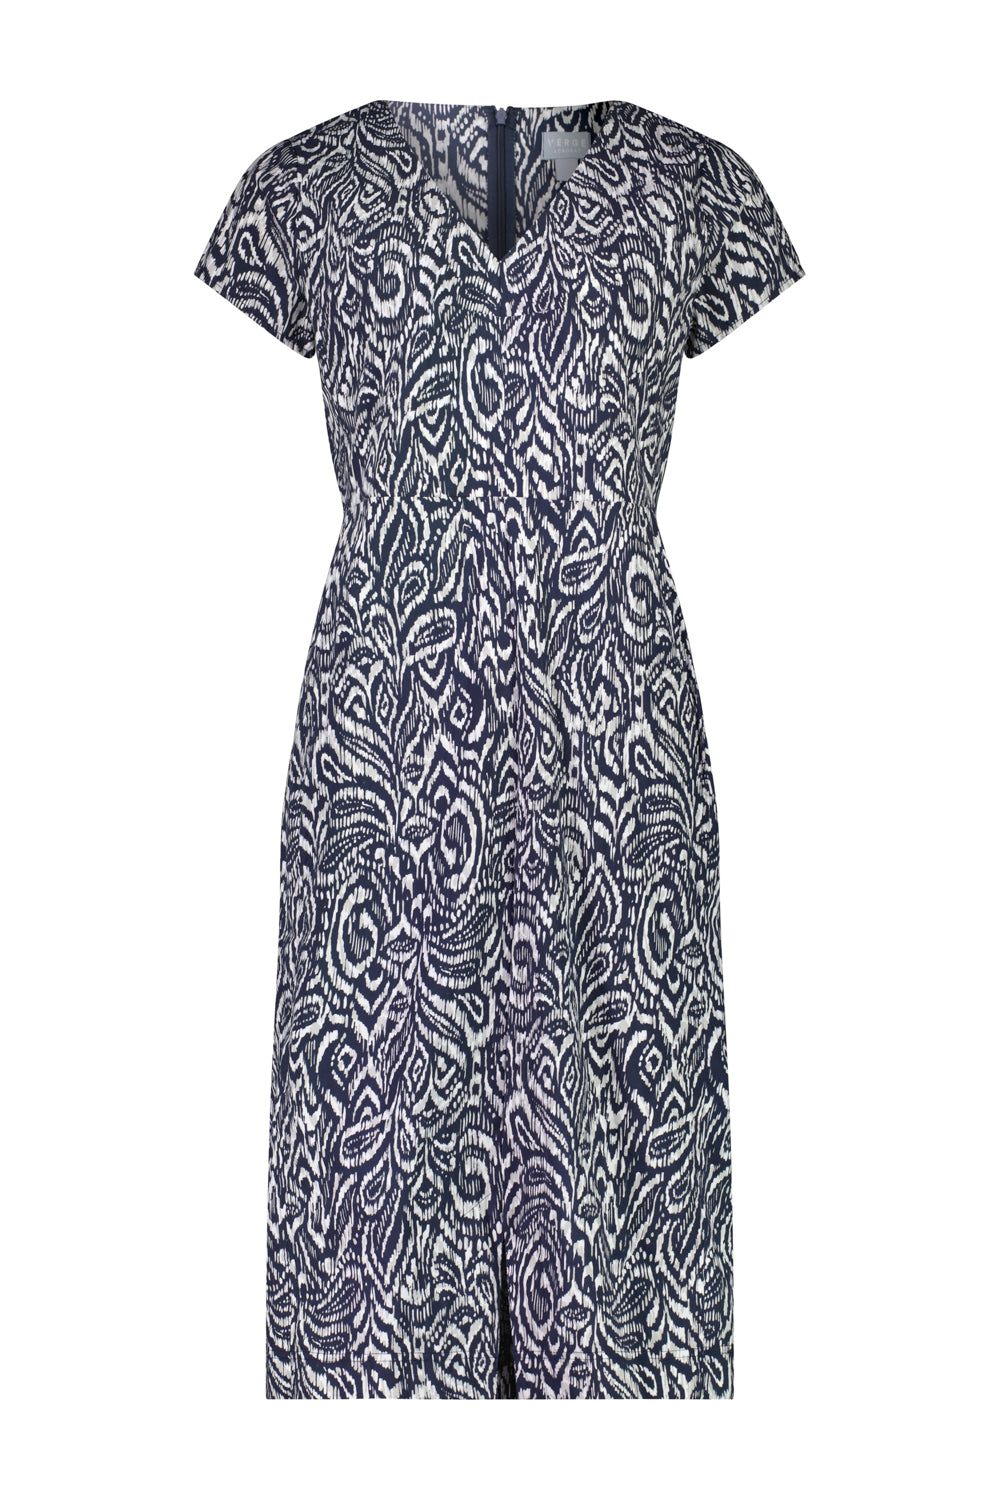 Acrobat Valley Dress - French Ink - Dress VERGE